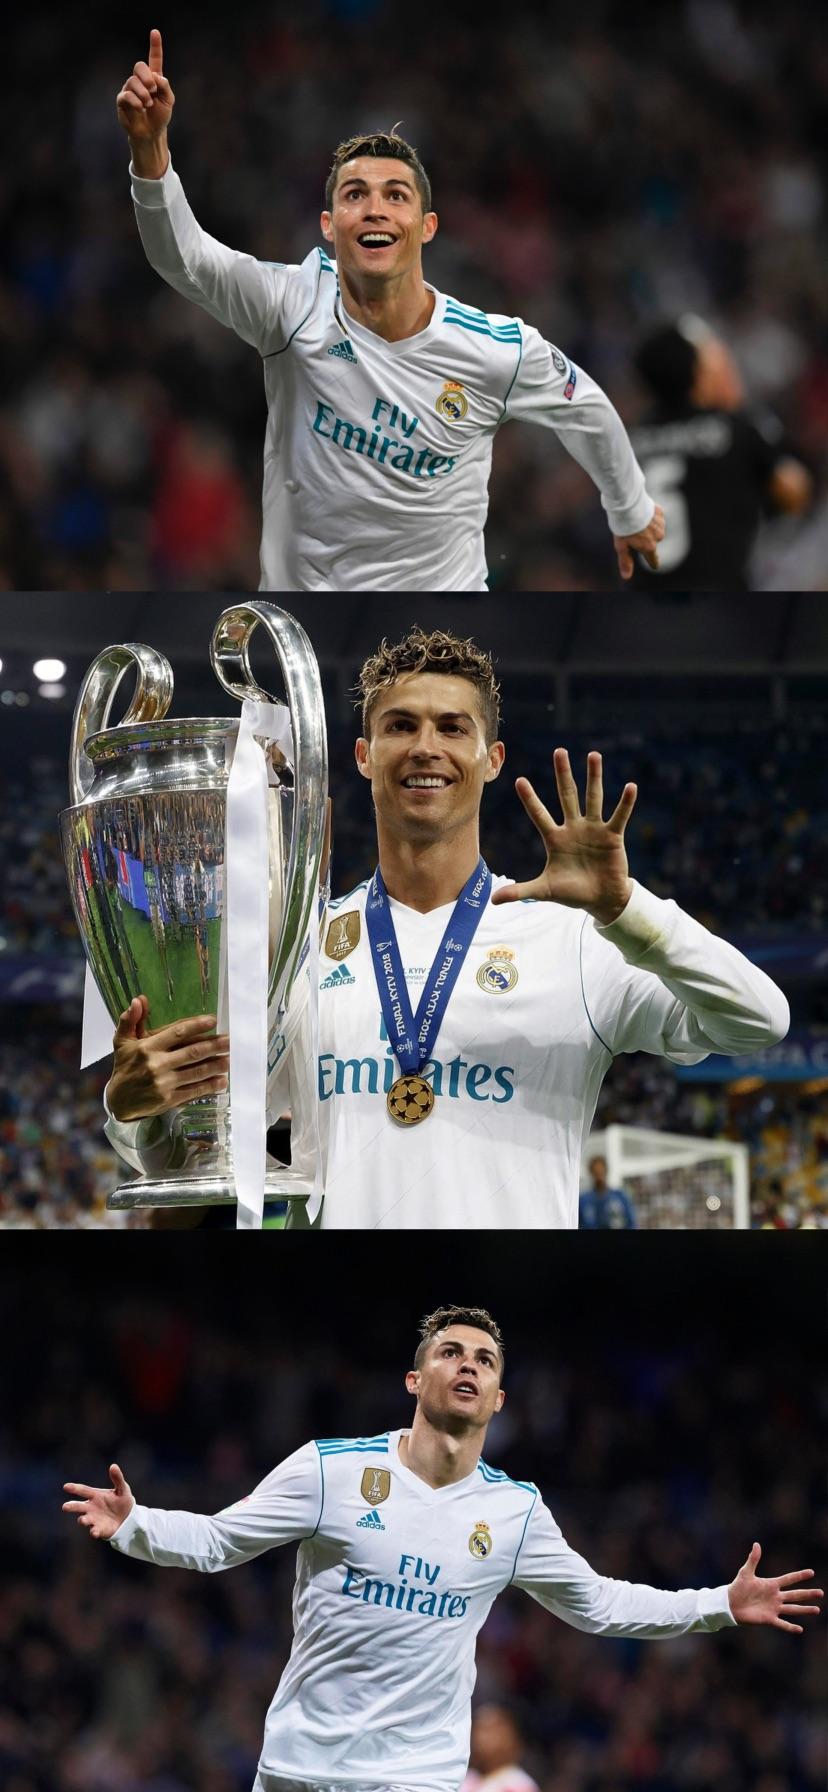  Cristiano Ronaldo Hintergrundbild 828x1792. Here are two Cristiano Ronaldo wallpaper i made the last night, i hope you enjoy them :)